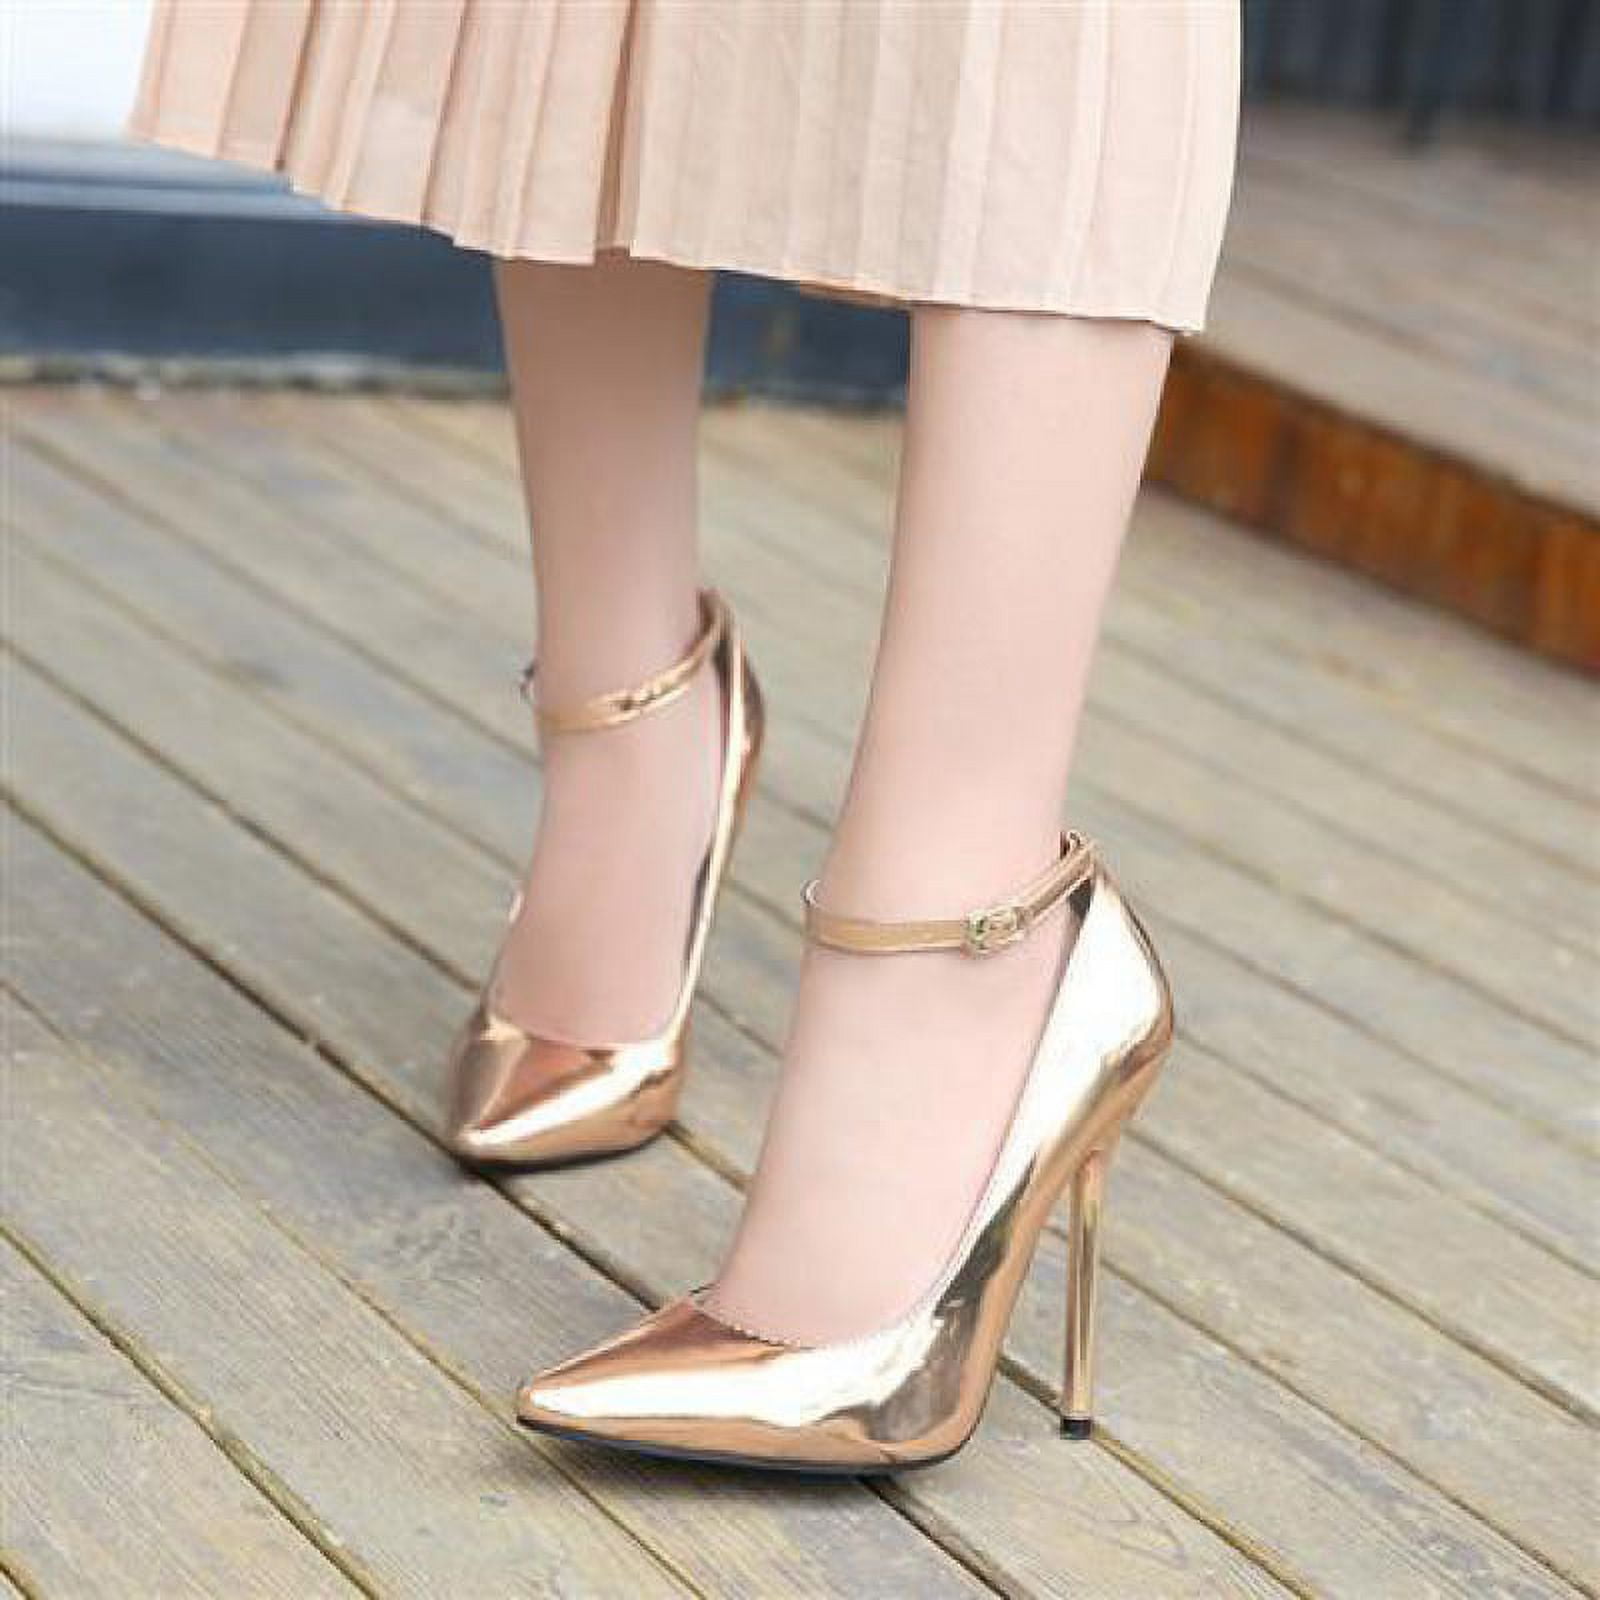 Super-high heels free women, says shoe king Louboutin, Lifestyle News -  AsiaOne